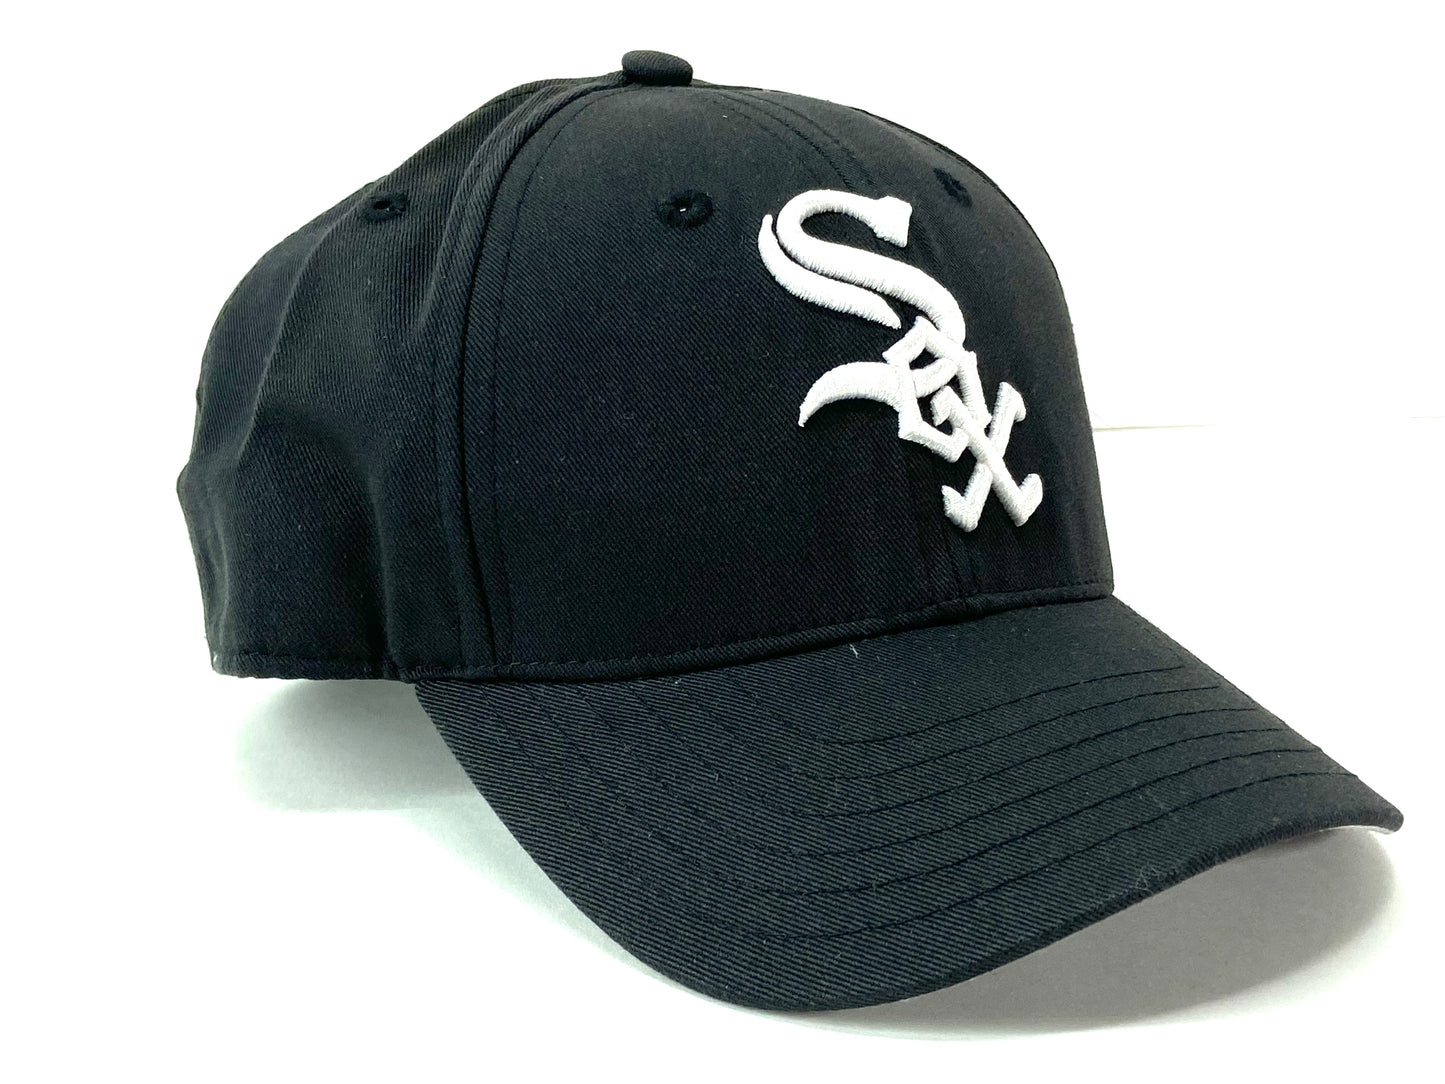 American League Vintage Late '90's MLB Replica Baseball Hats by New Era